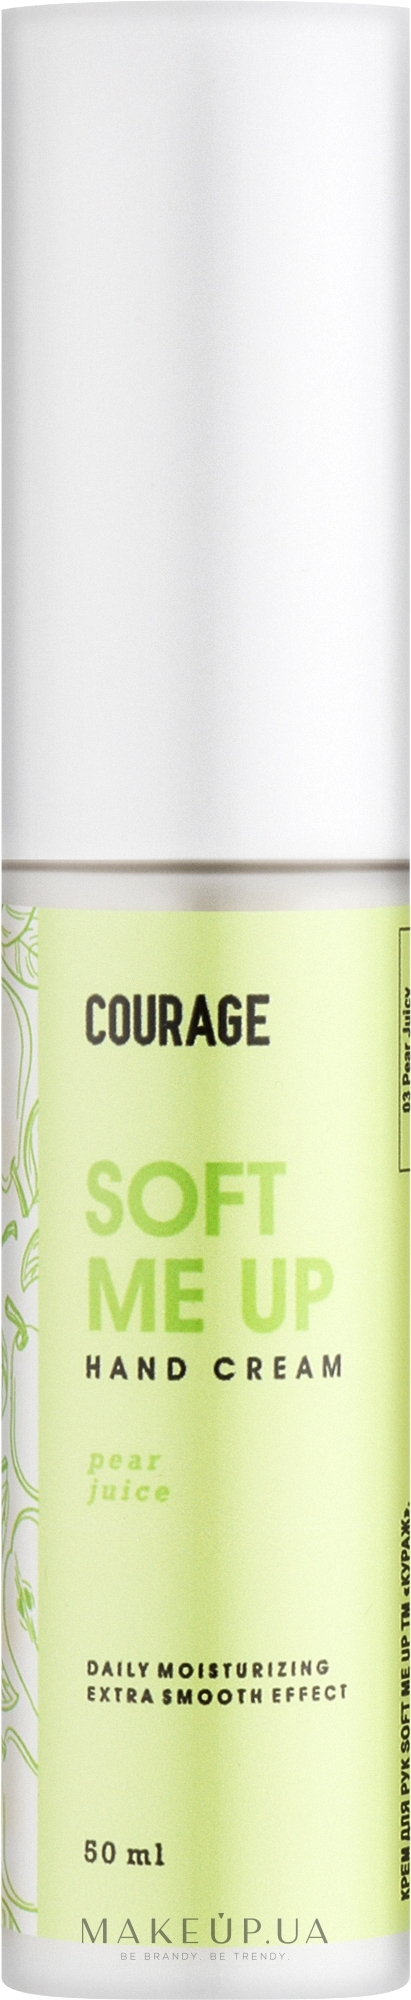 Крем для рук "Сочная груша" - Courage Soft Me Up Hand Cream Pear Juicy — фото 50ml